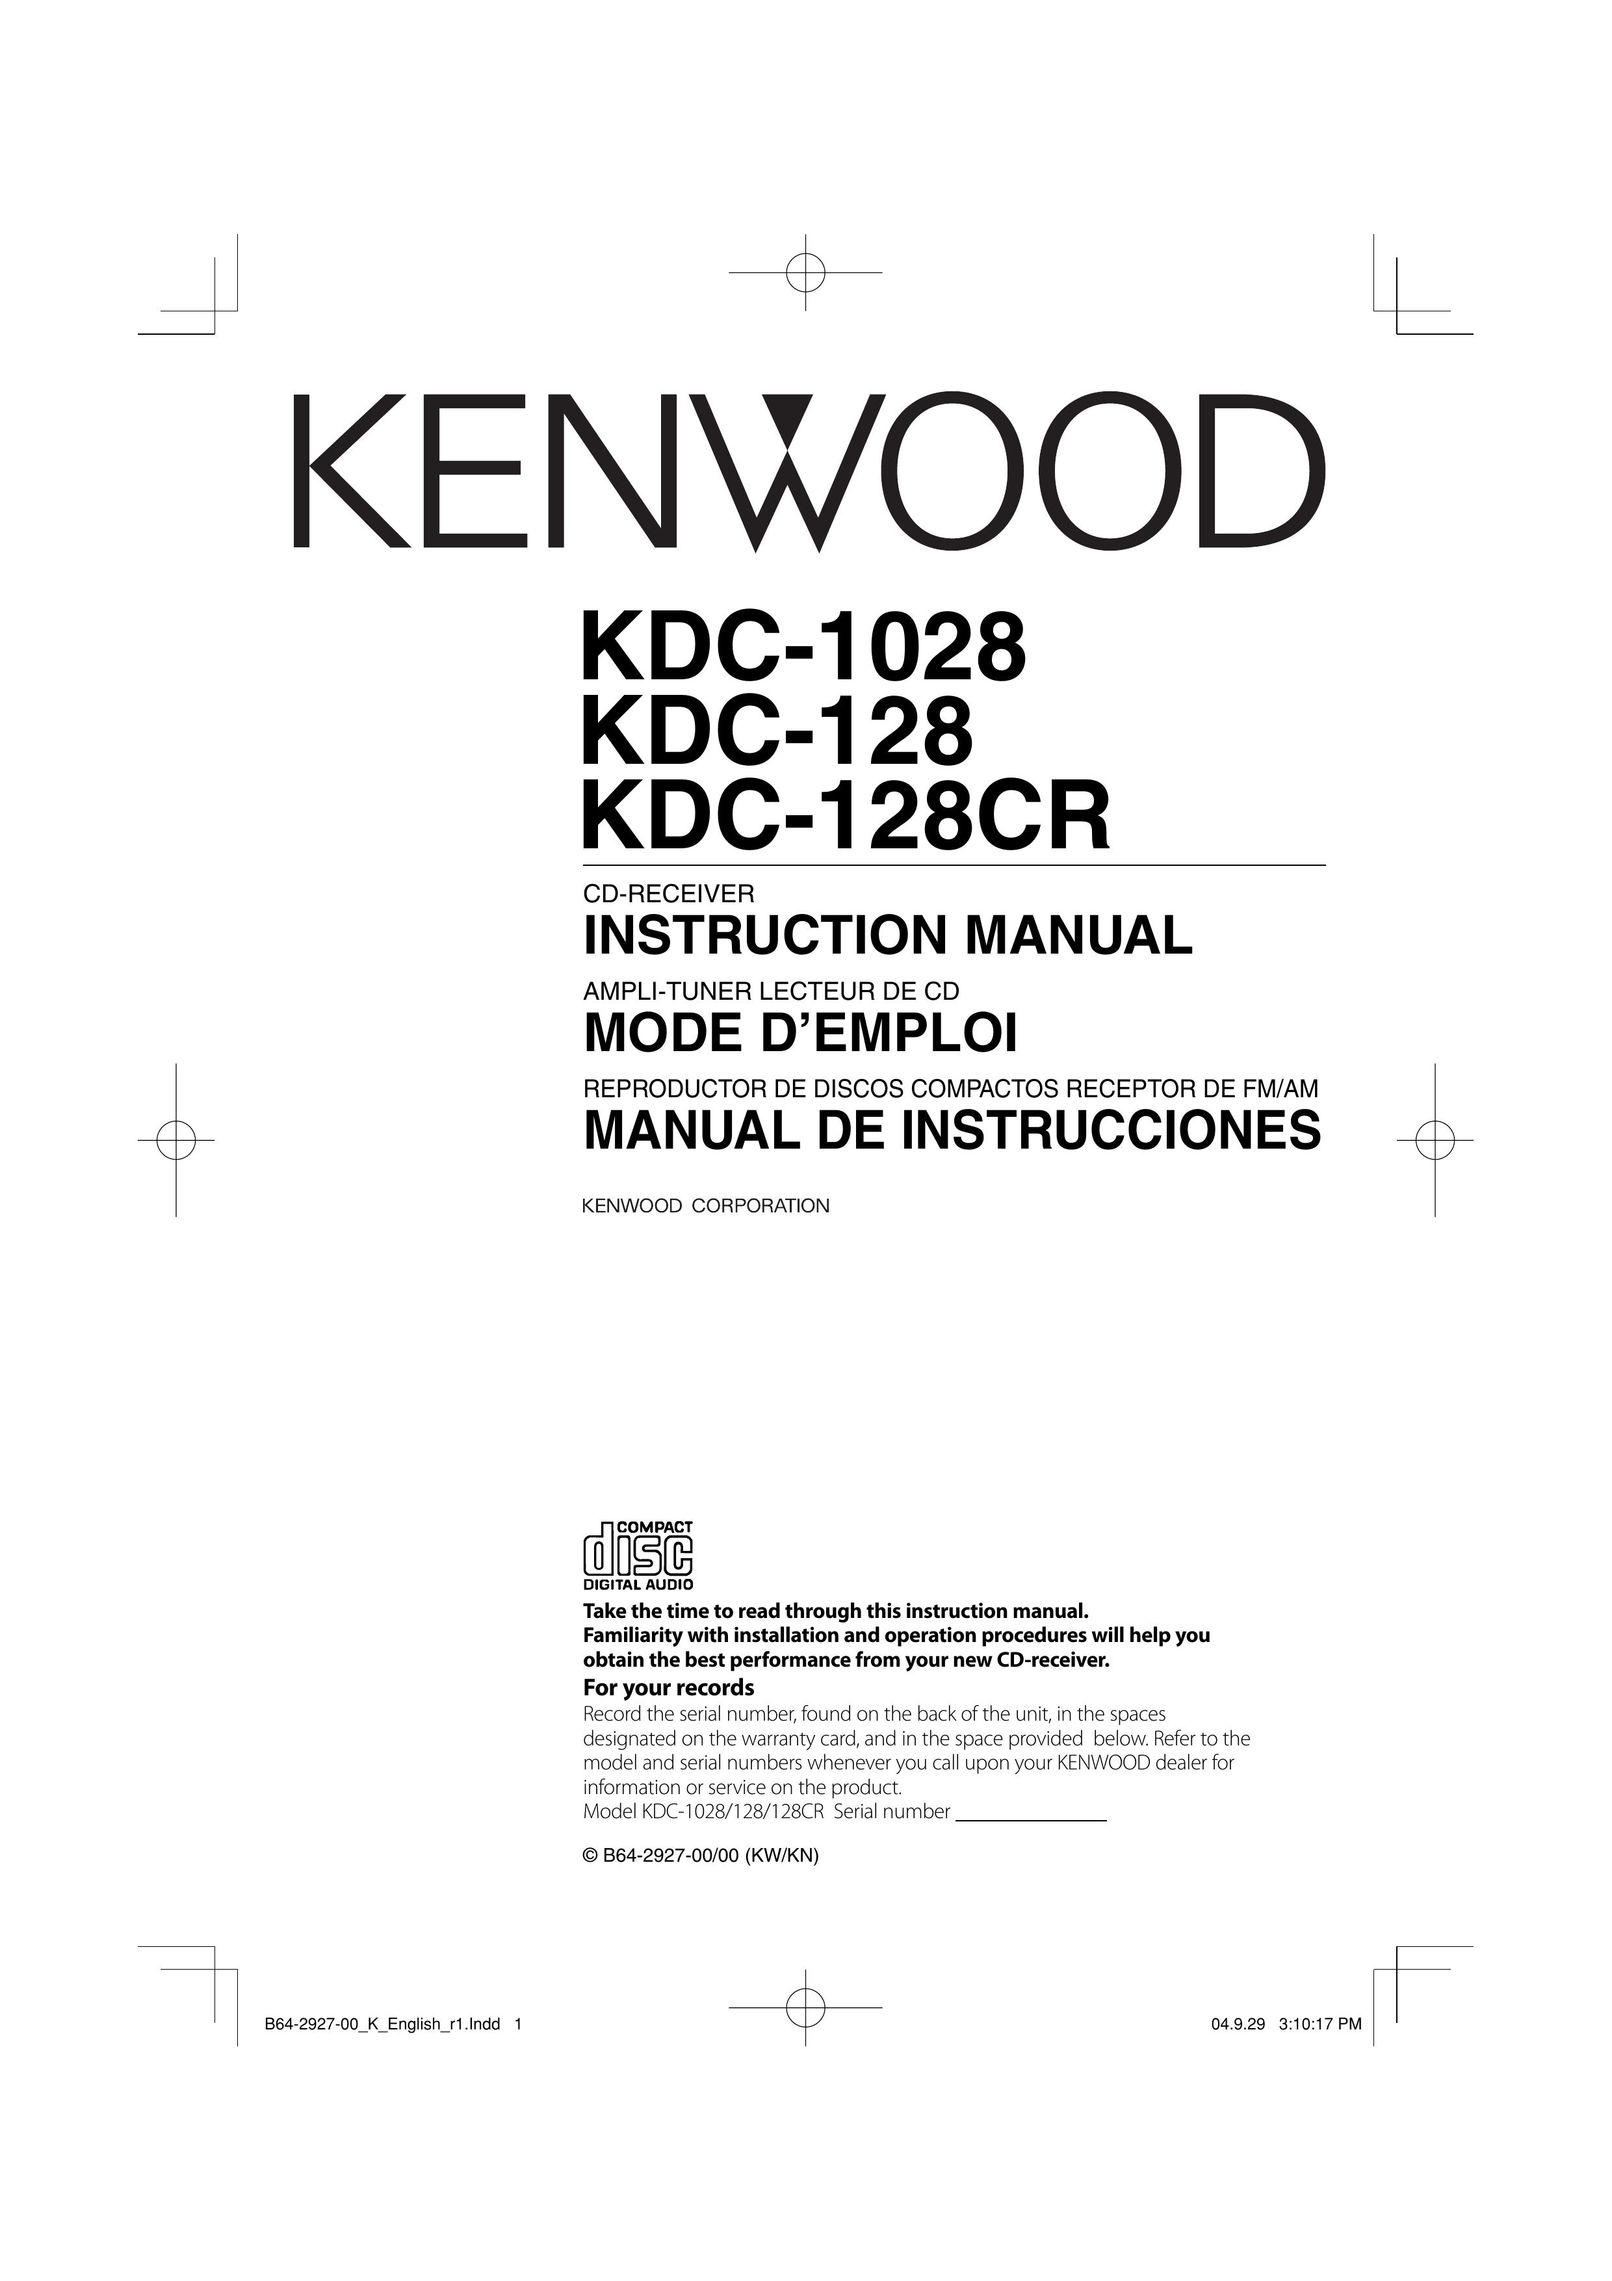 Kenwood 128 CD Player User Manual